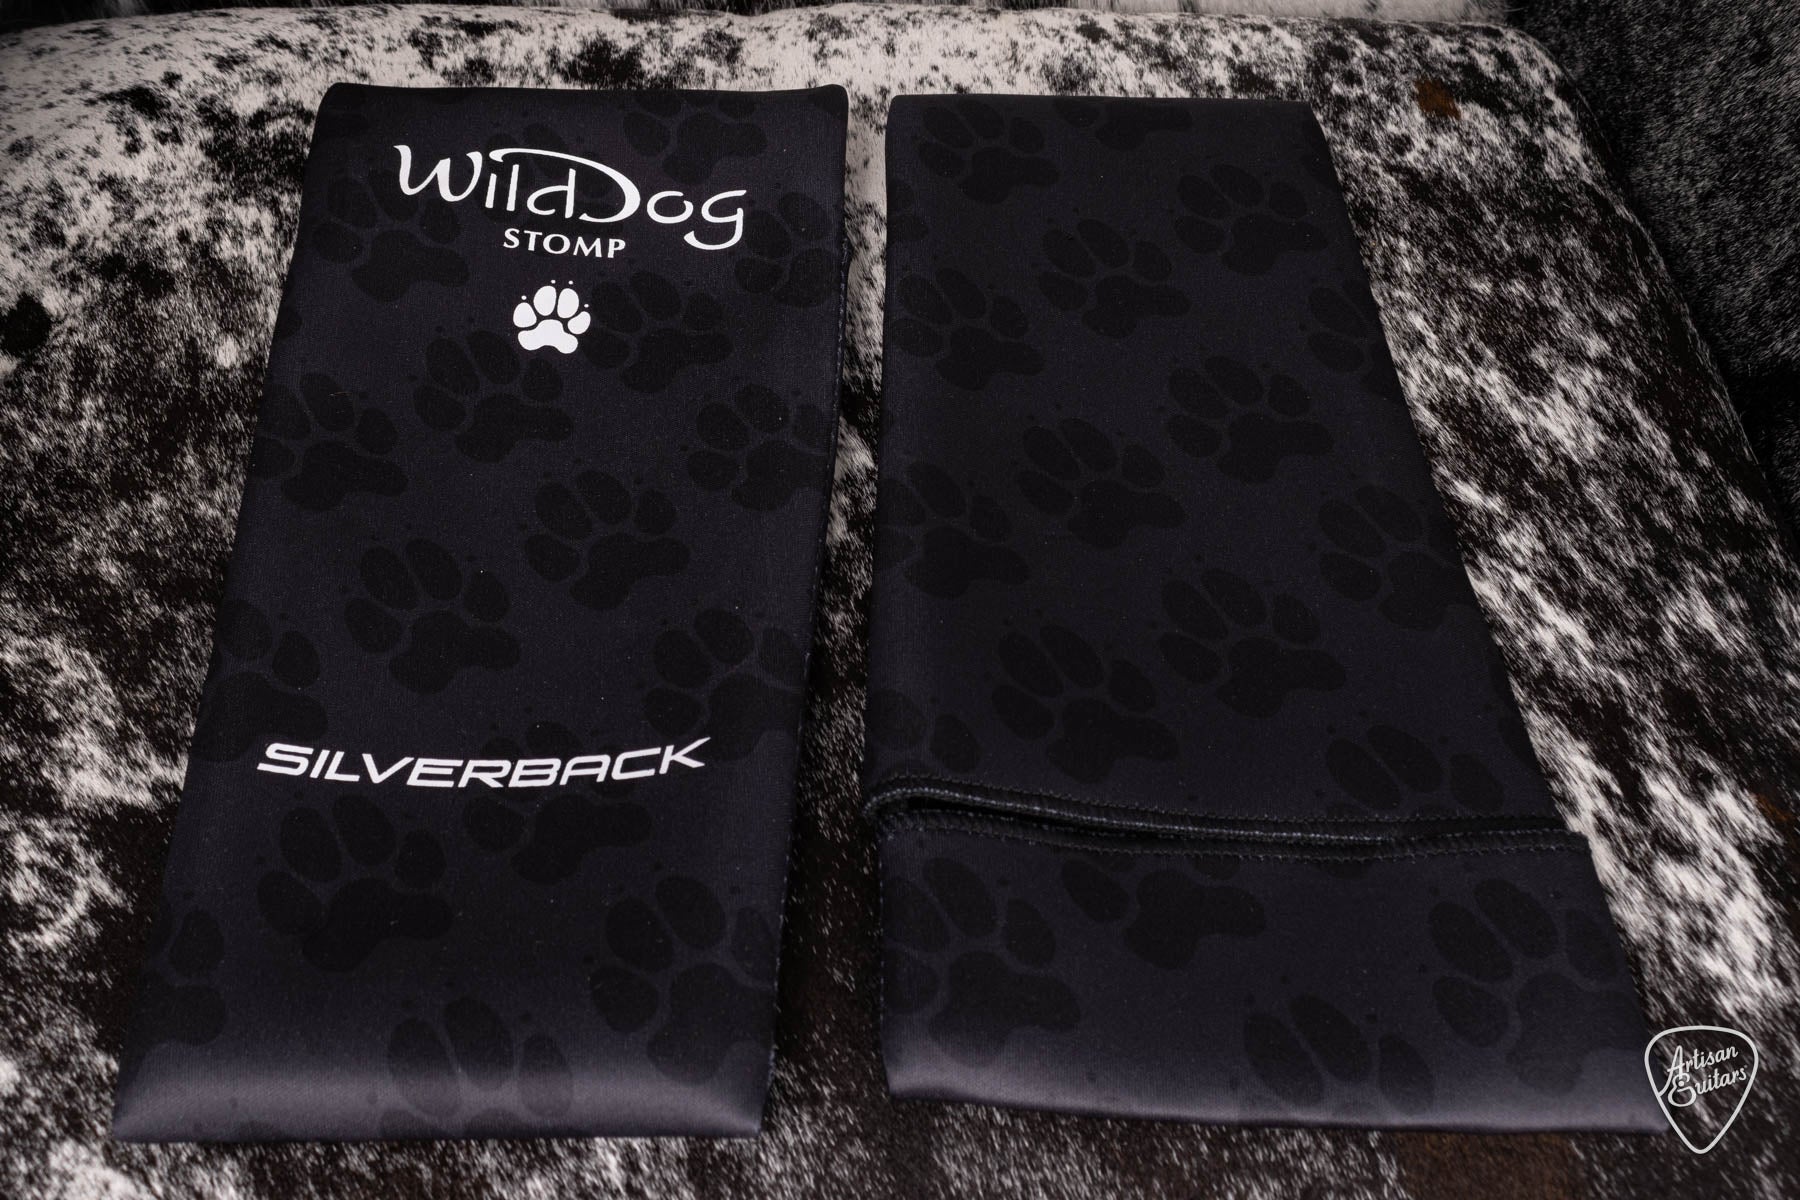 Wild Dog Silverback Stomp Box with Jingles - WD-531123